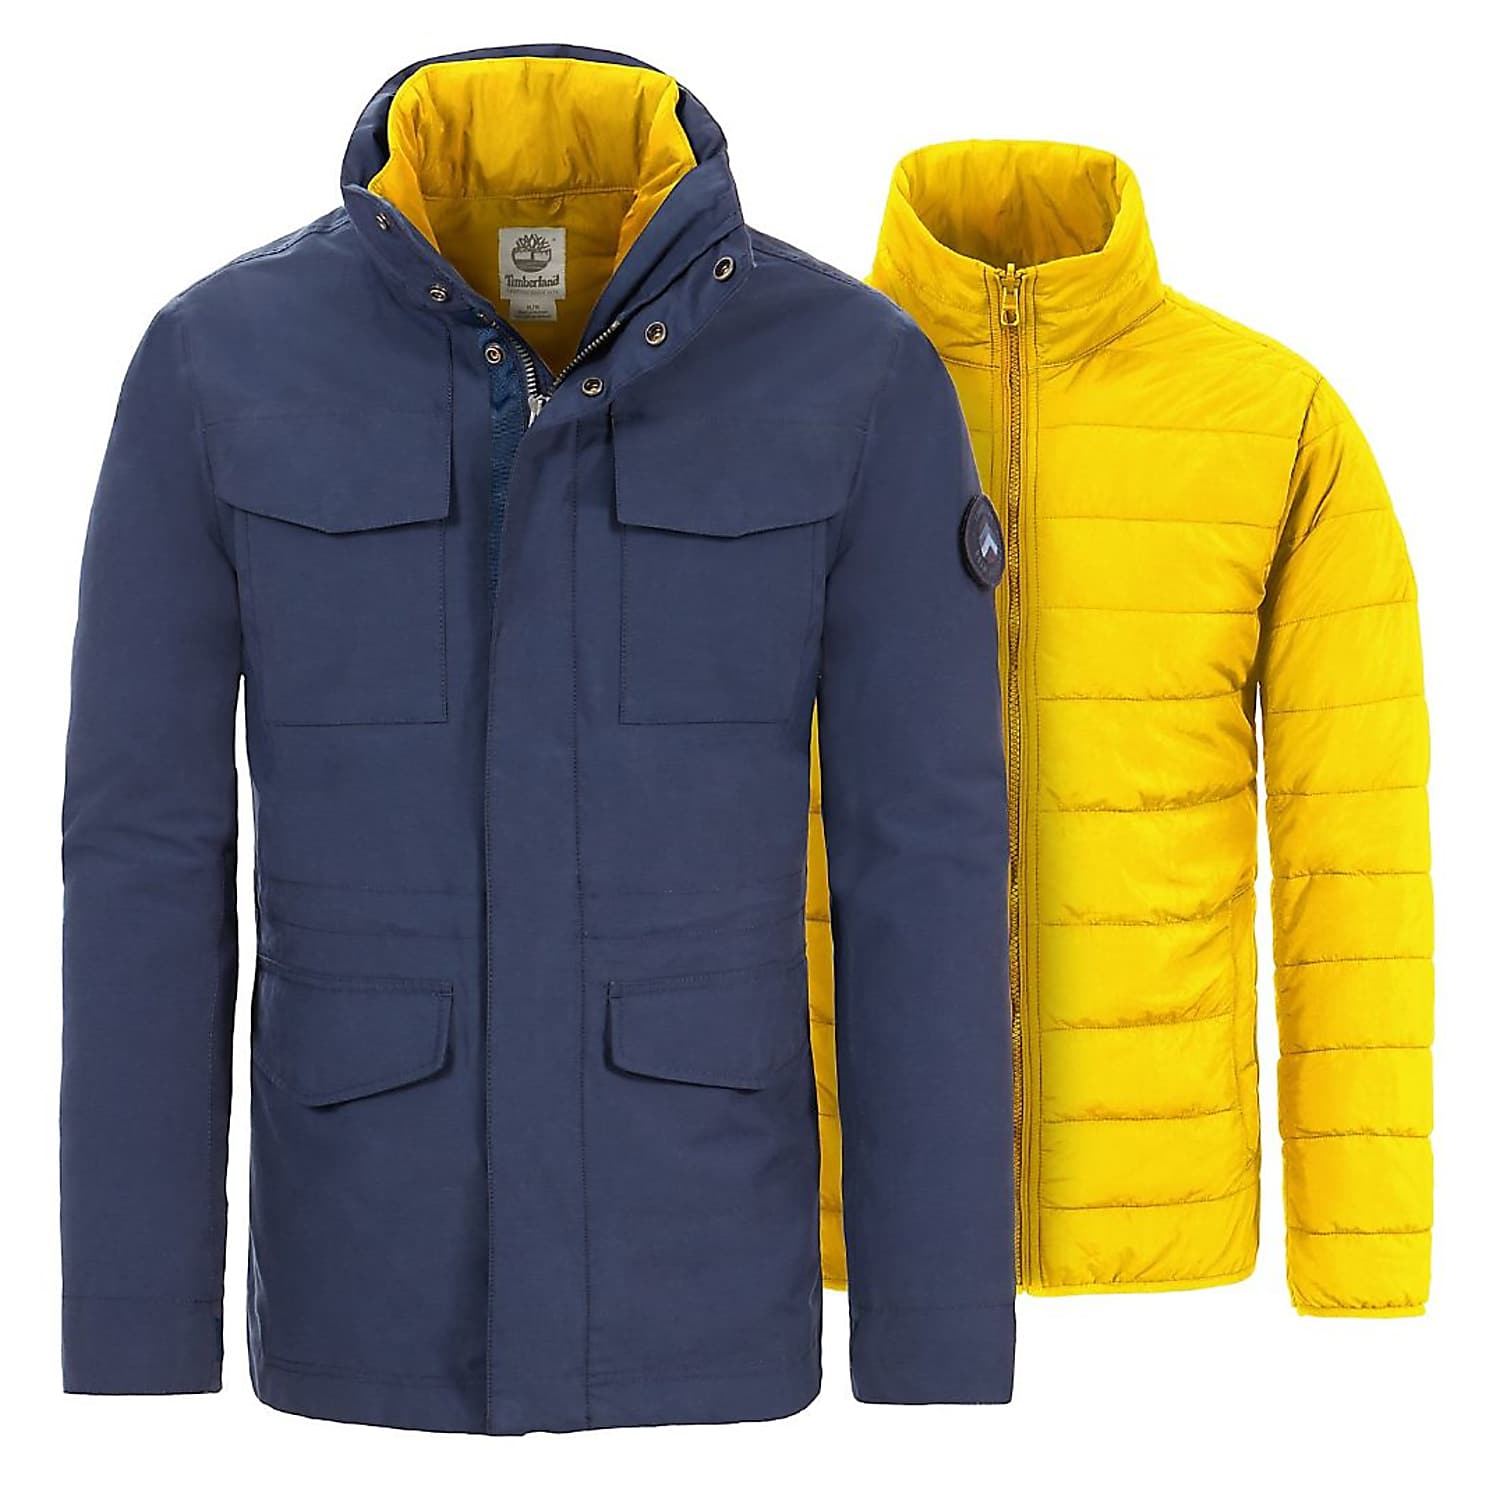 timberland snowdon peak jacket